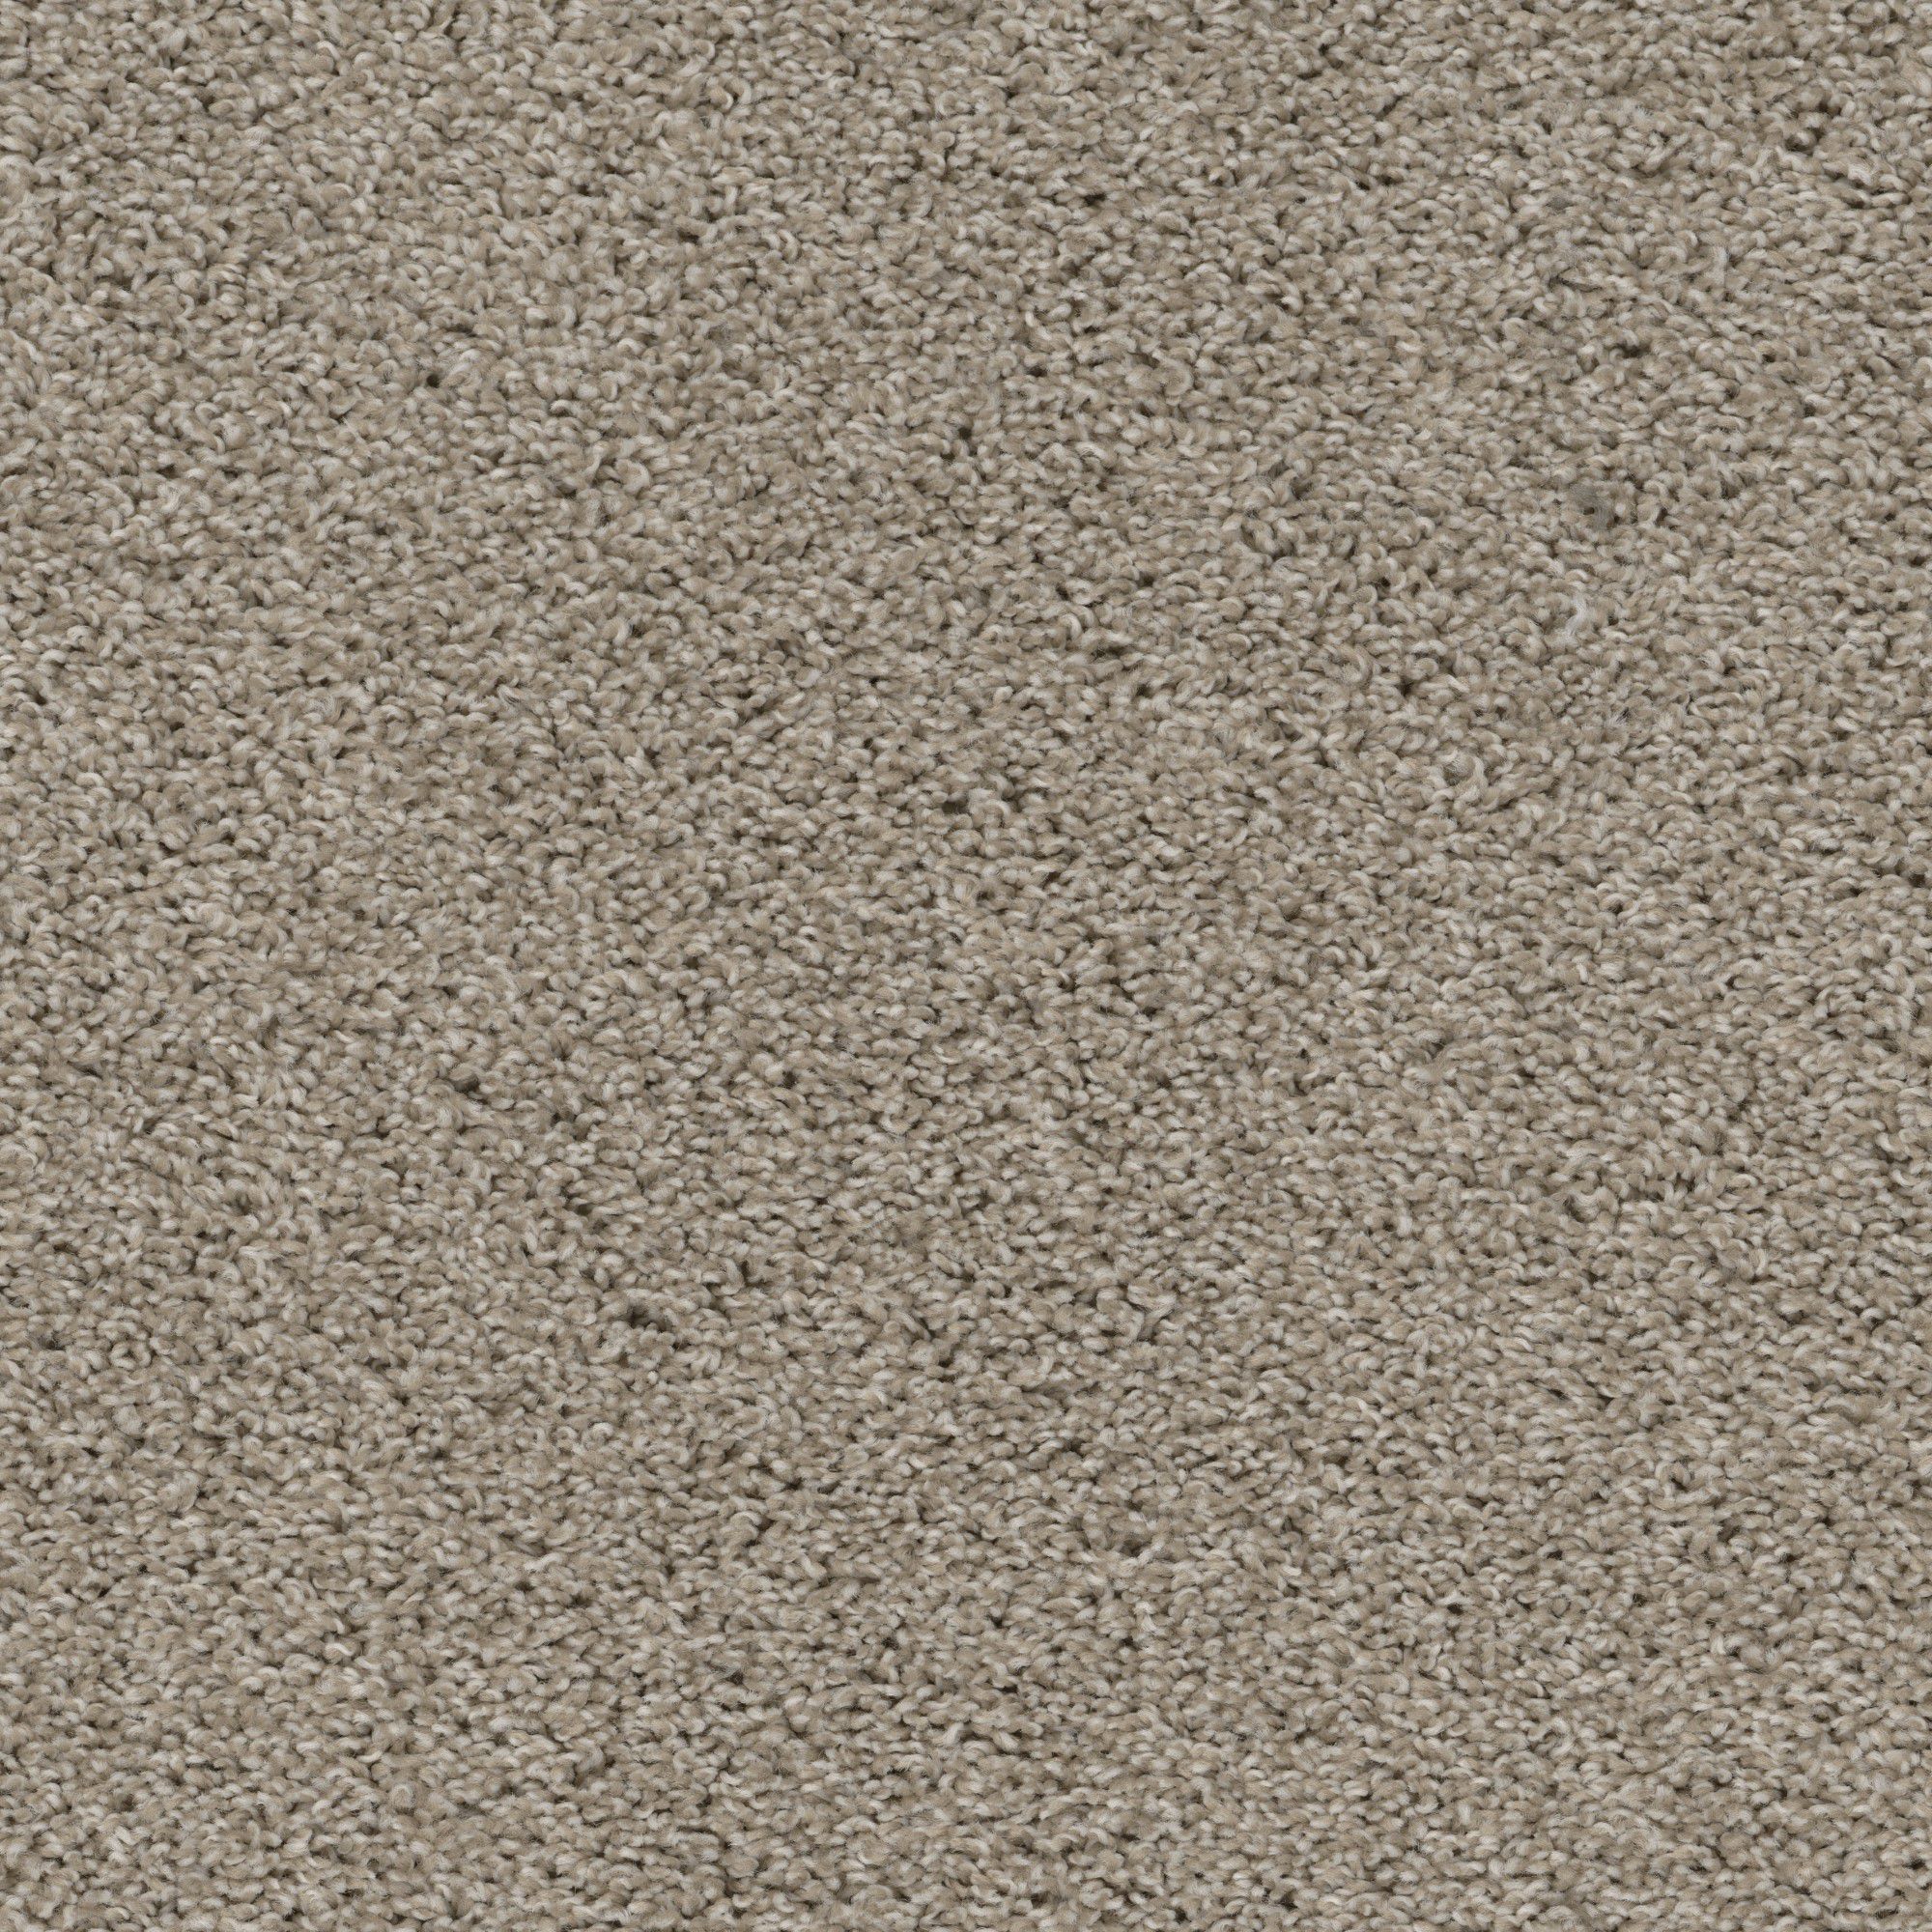 Shazam - Linen Carpet